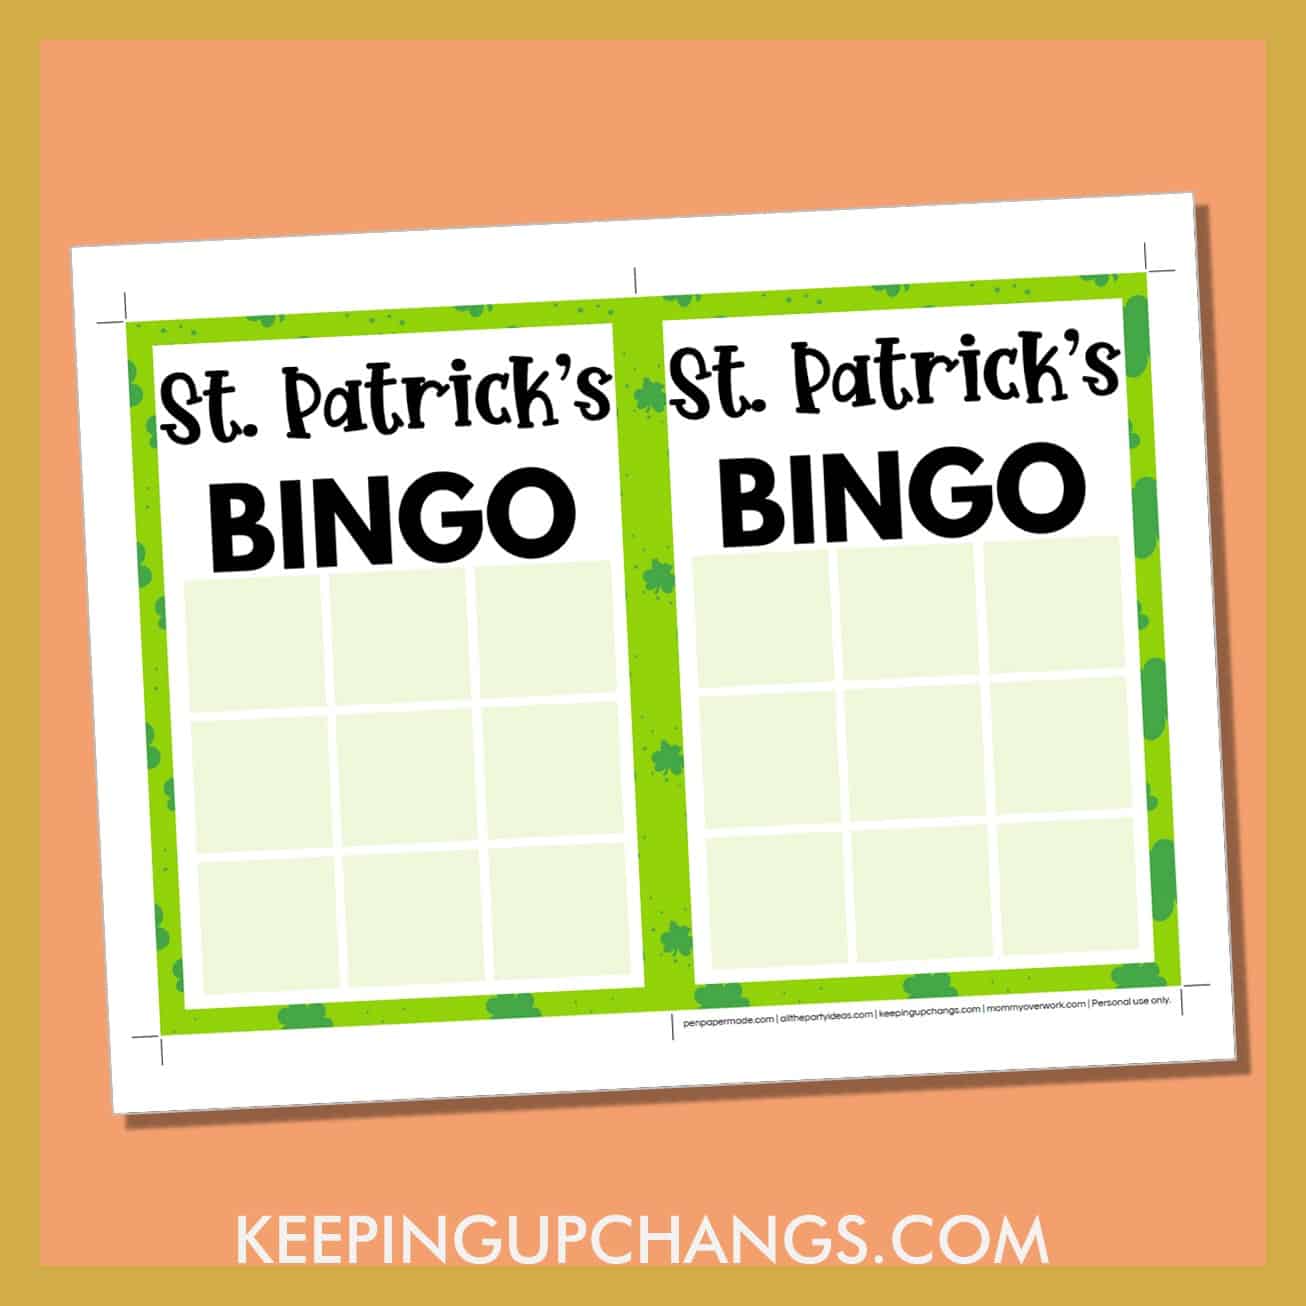 free st patrick's day bingo 3x3 grid game board blank template.